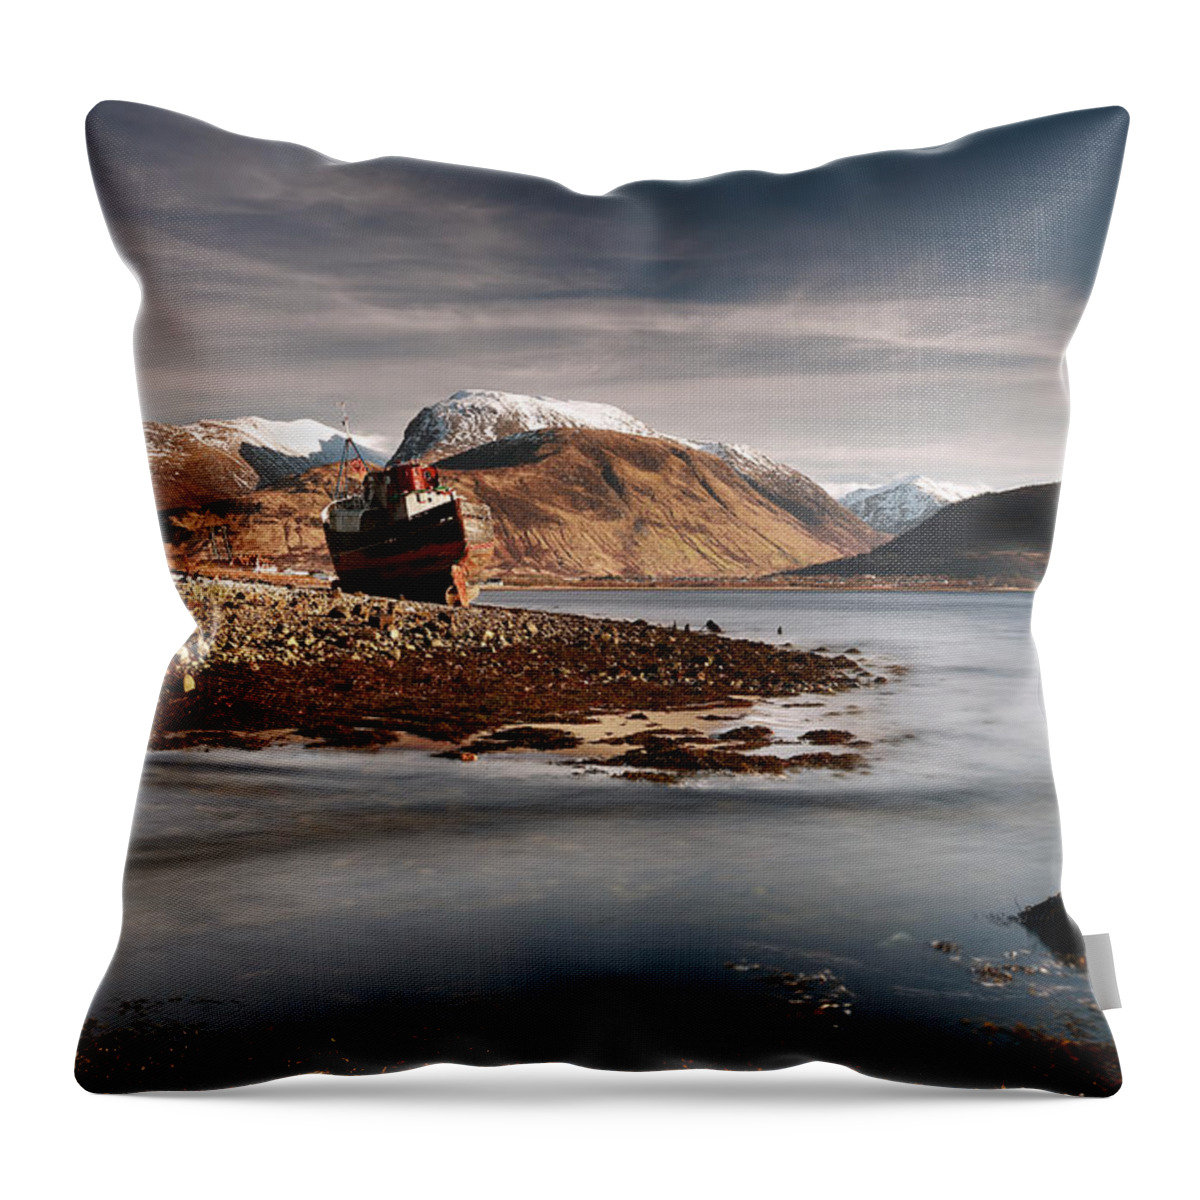 Loch Throw Pillow featuring the photograph Ben Nevis by Grant Glendinning